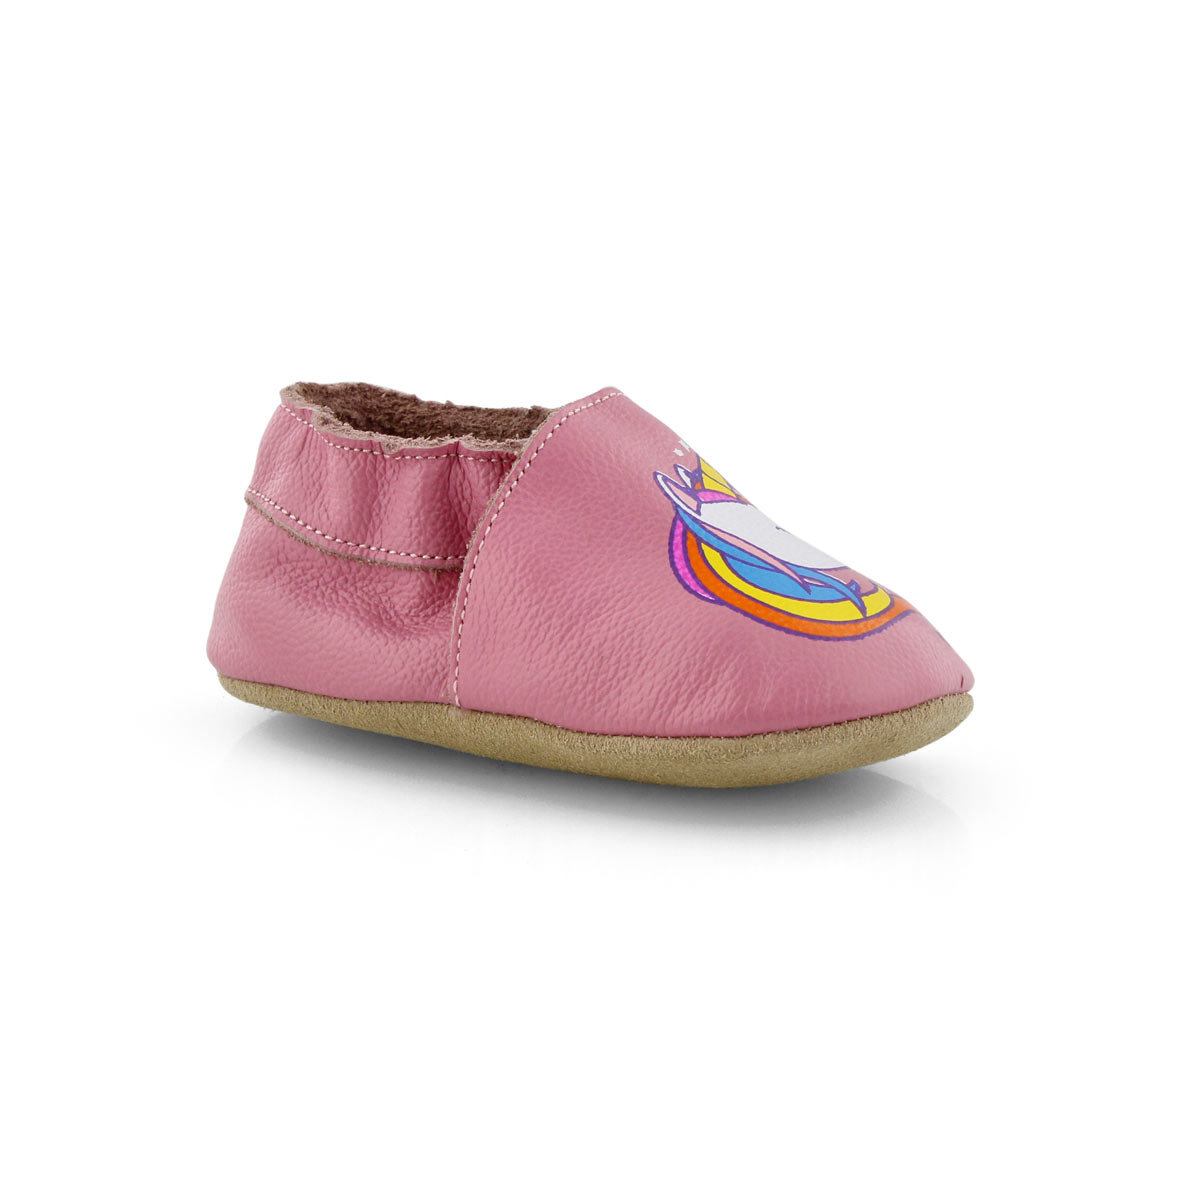 UNICORN pink slipper booties | SoftMoc 